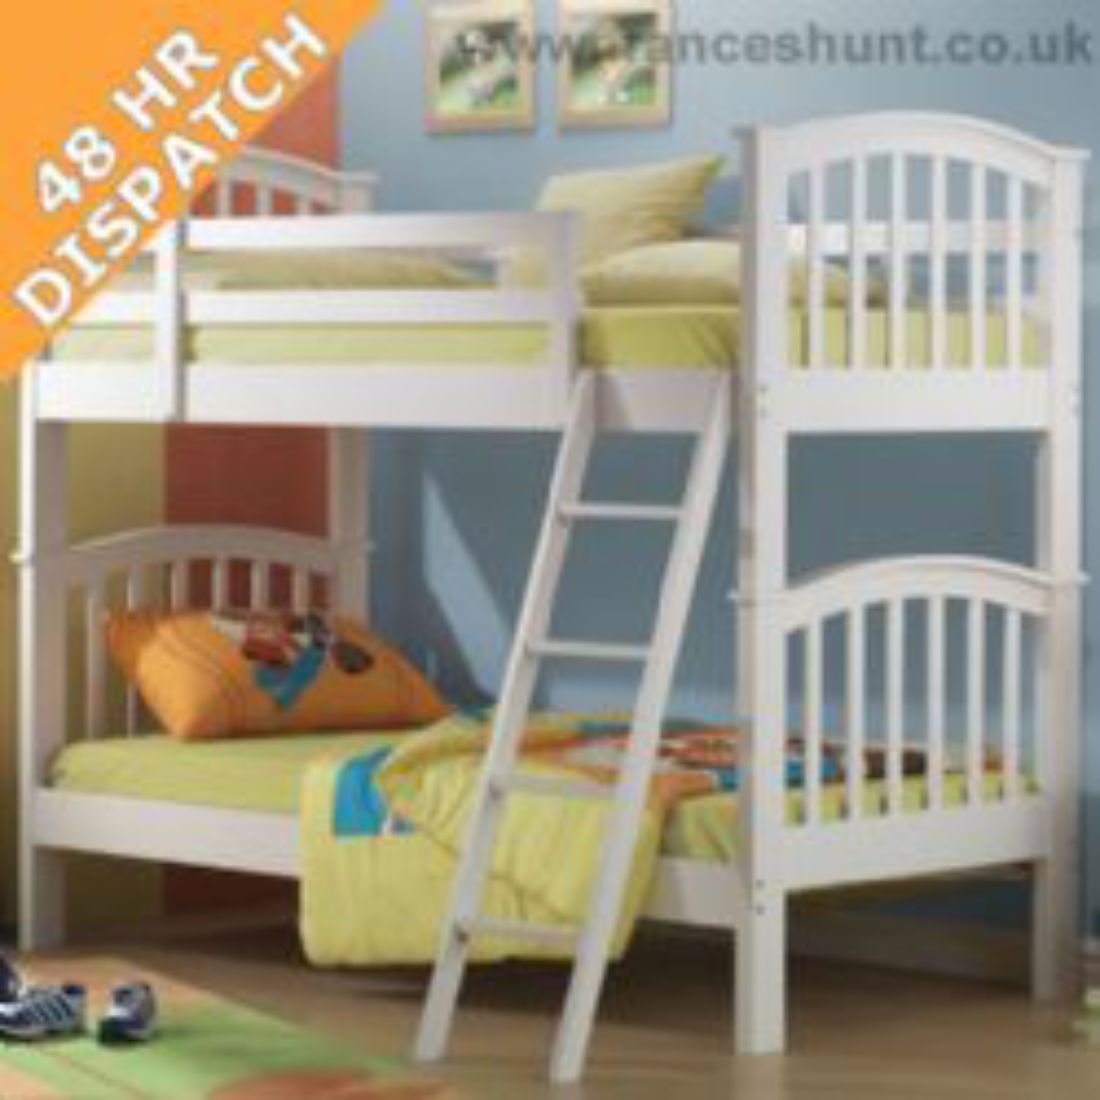 Mattress to fit J White kids bunk bed - mattress size is 190 x 90 cm